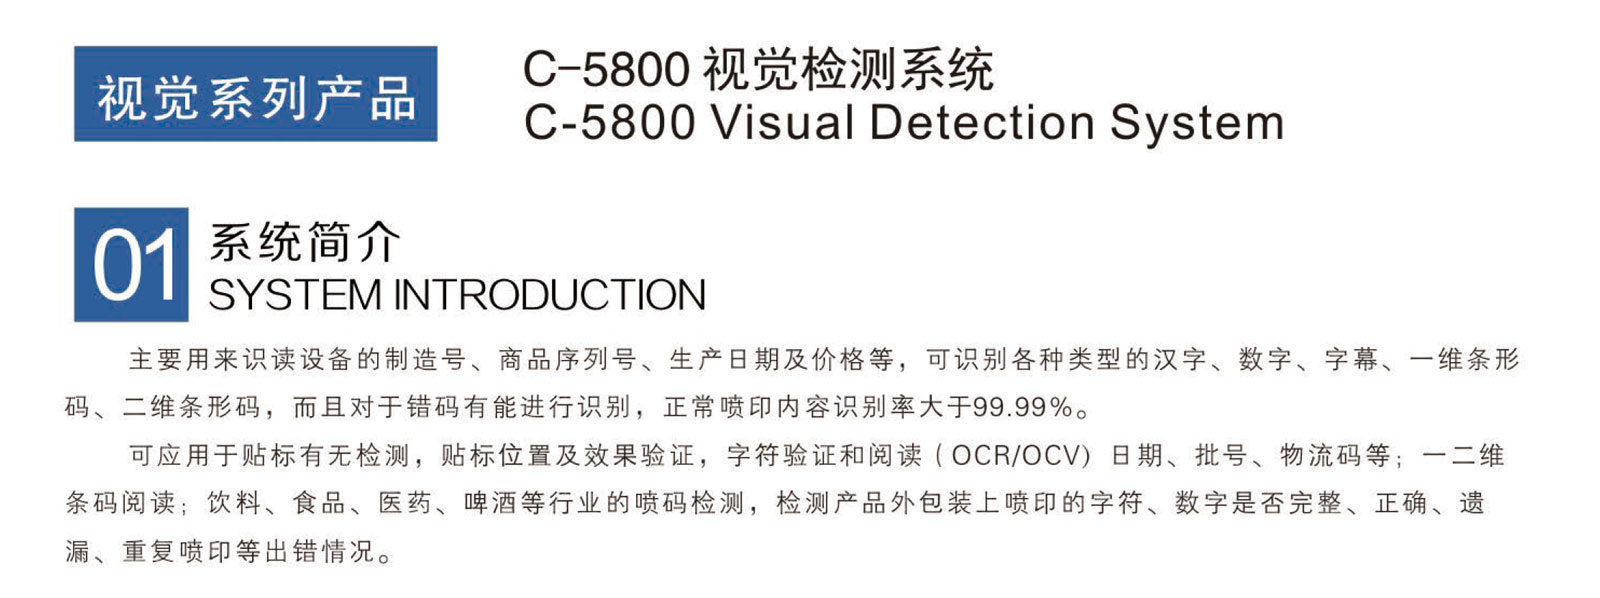 C-5800机器视觉检测系统 C-5800 Visual Detection System-成都申越科技有限公司